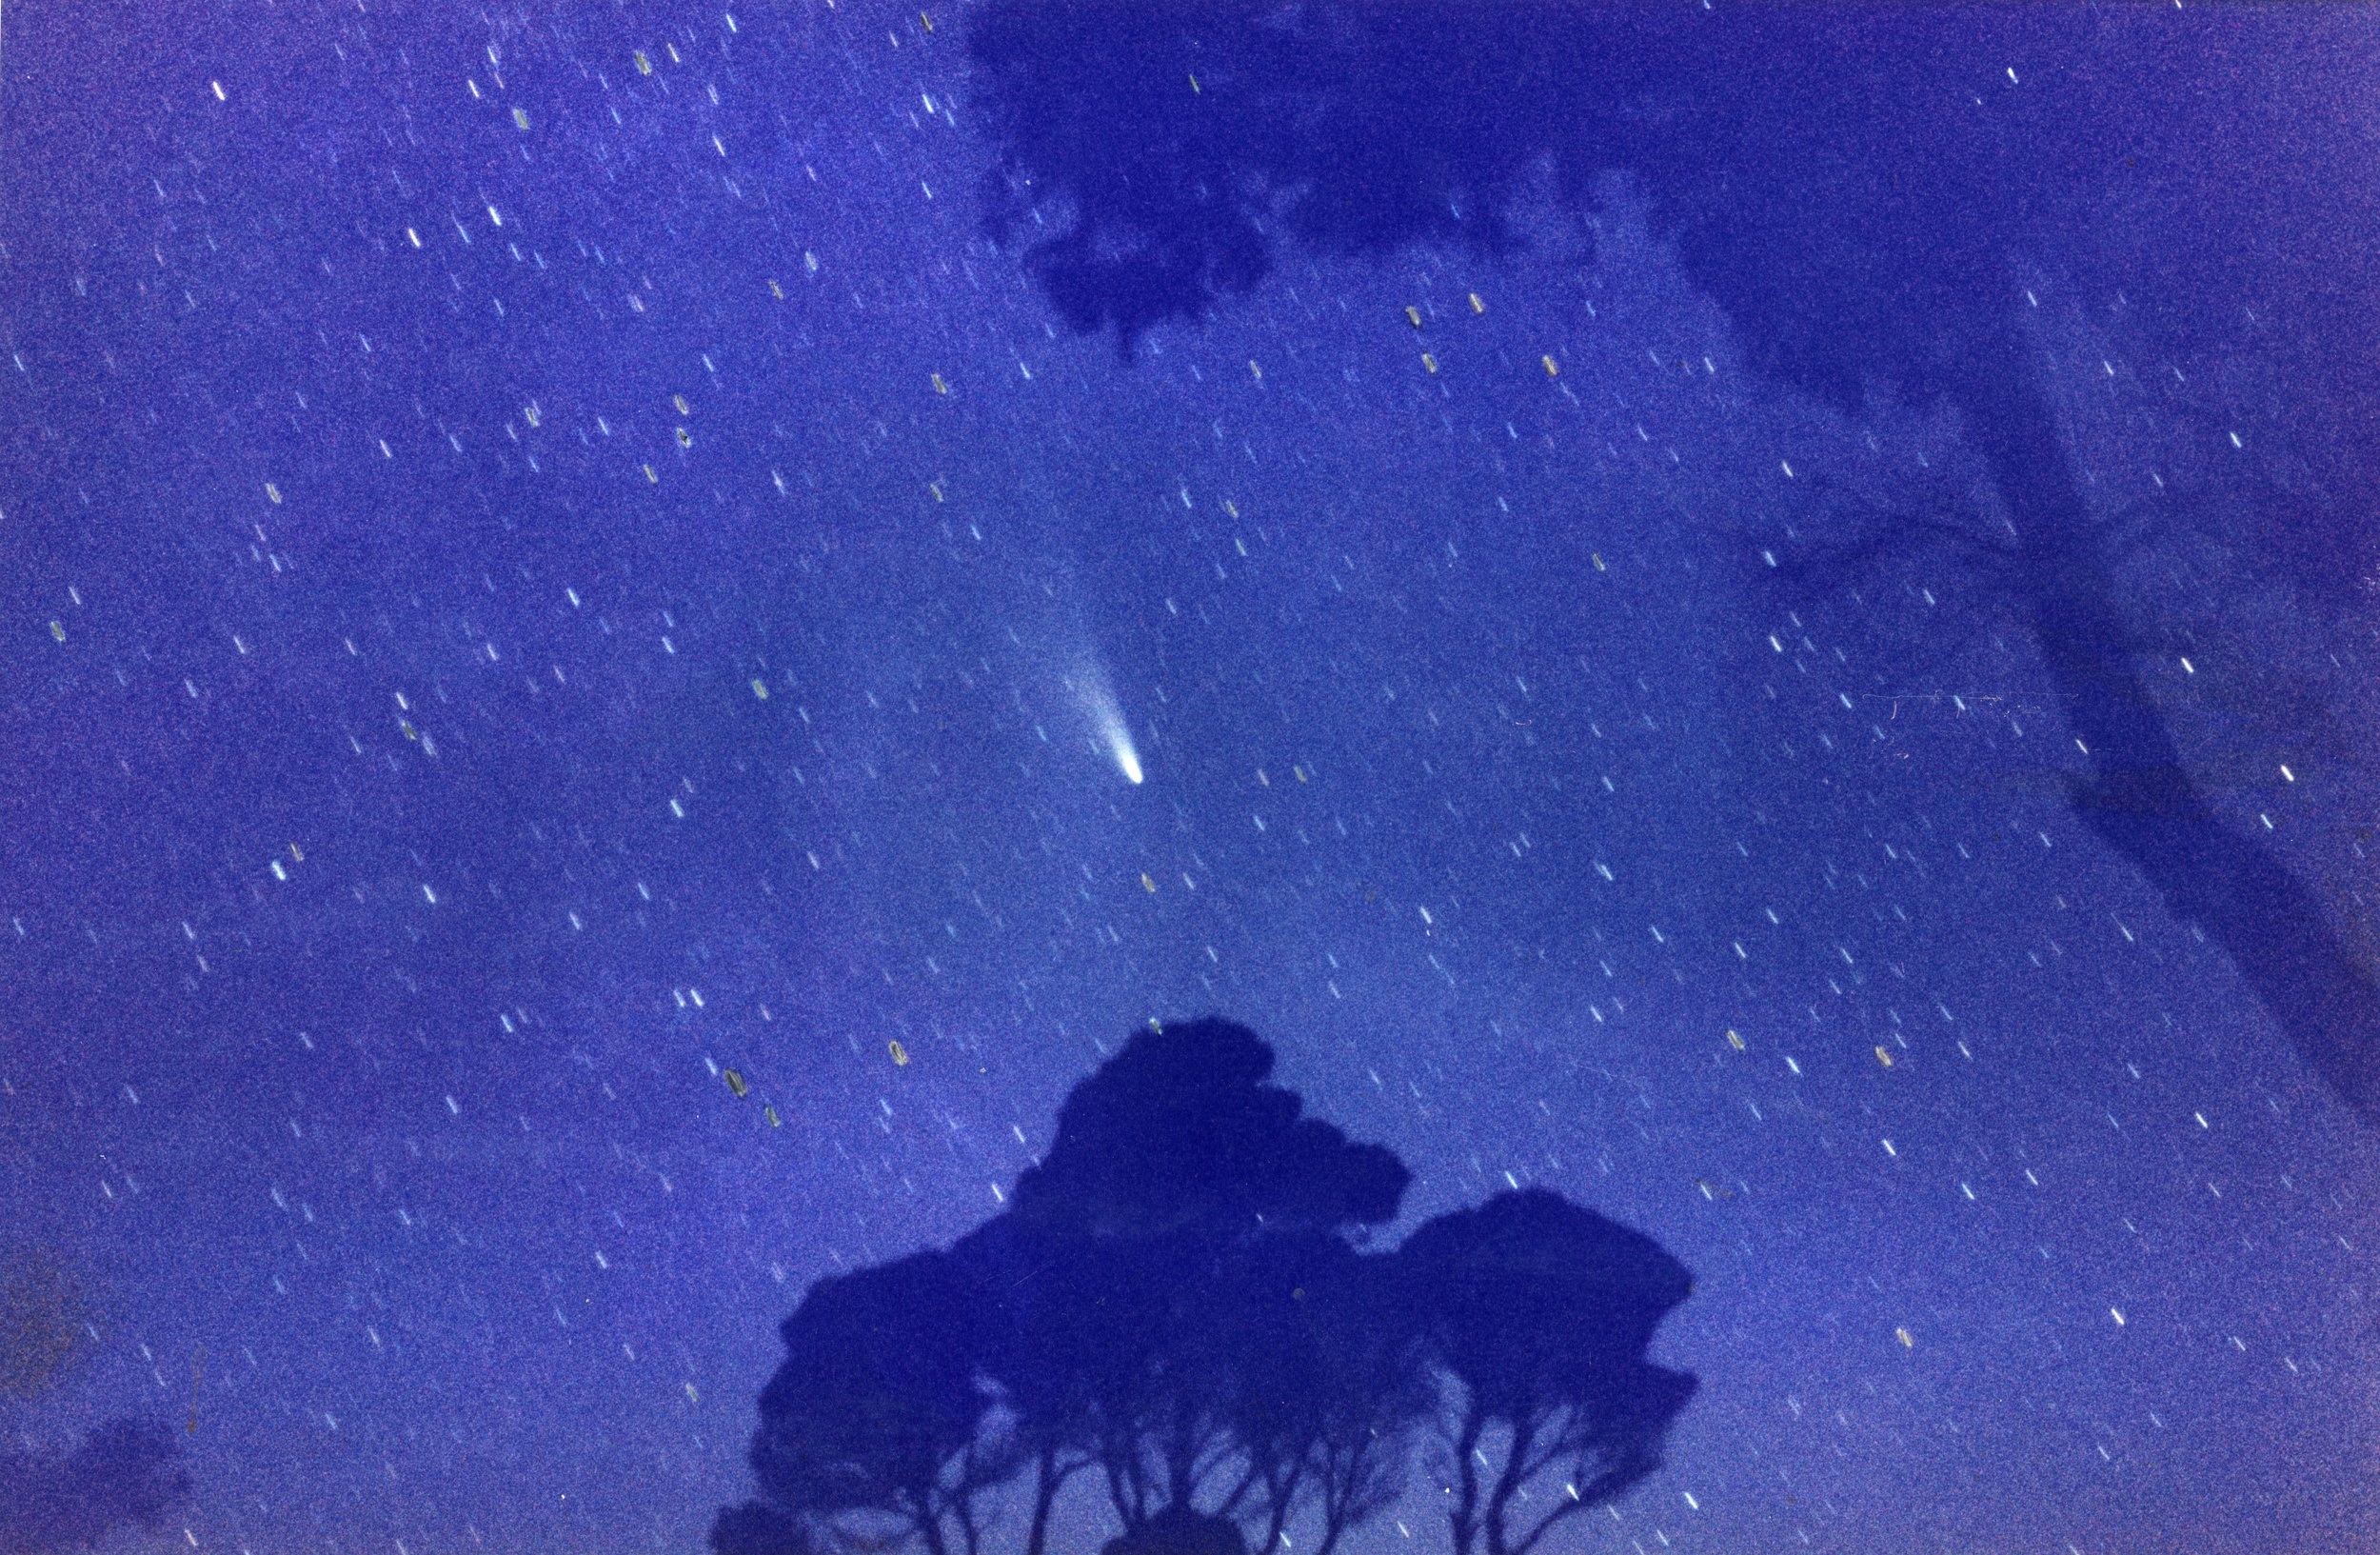 Halley's Comet, Anson's Bay, 1986